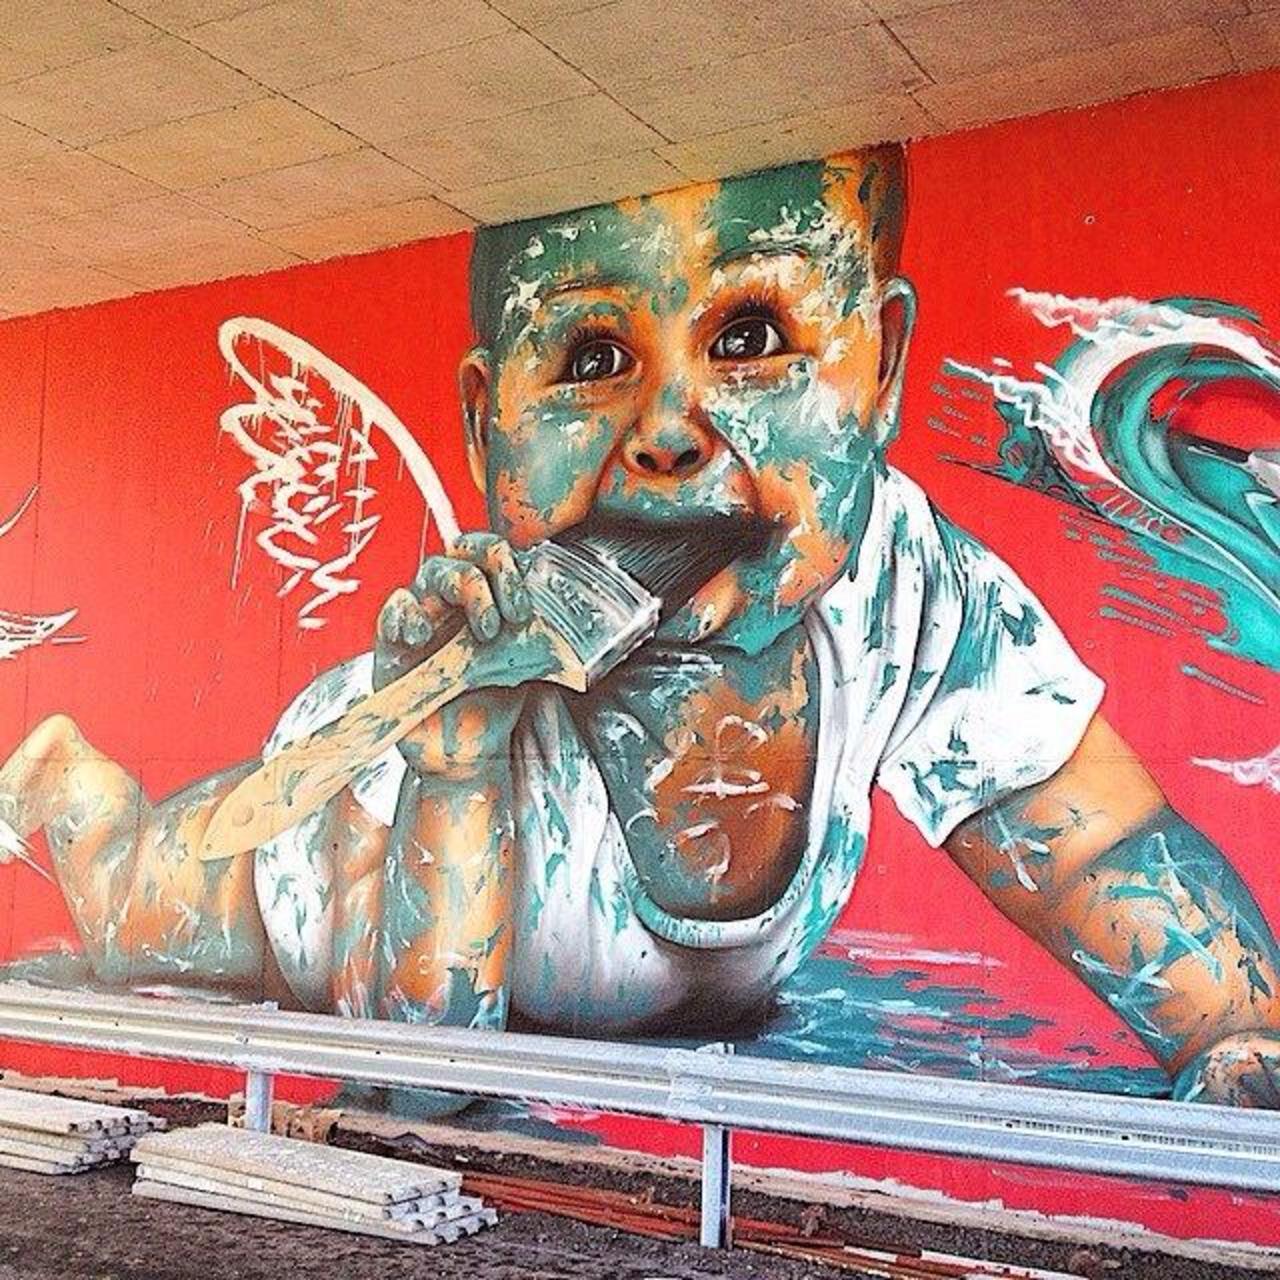 Endearing new Street Art by Cheone 

#art #arte #graffiti #streetart http://t.co/mCI0E8ijEw